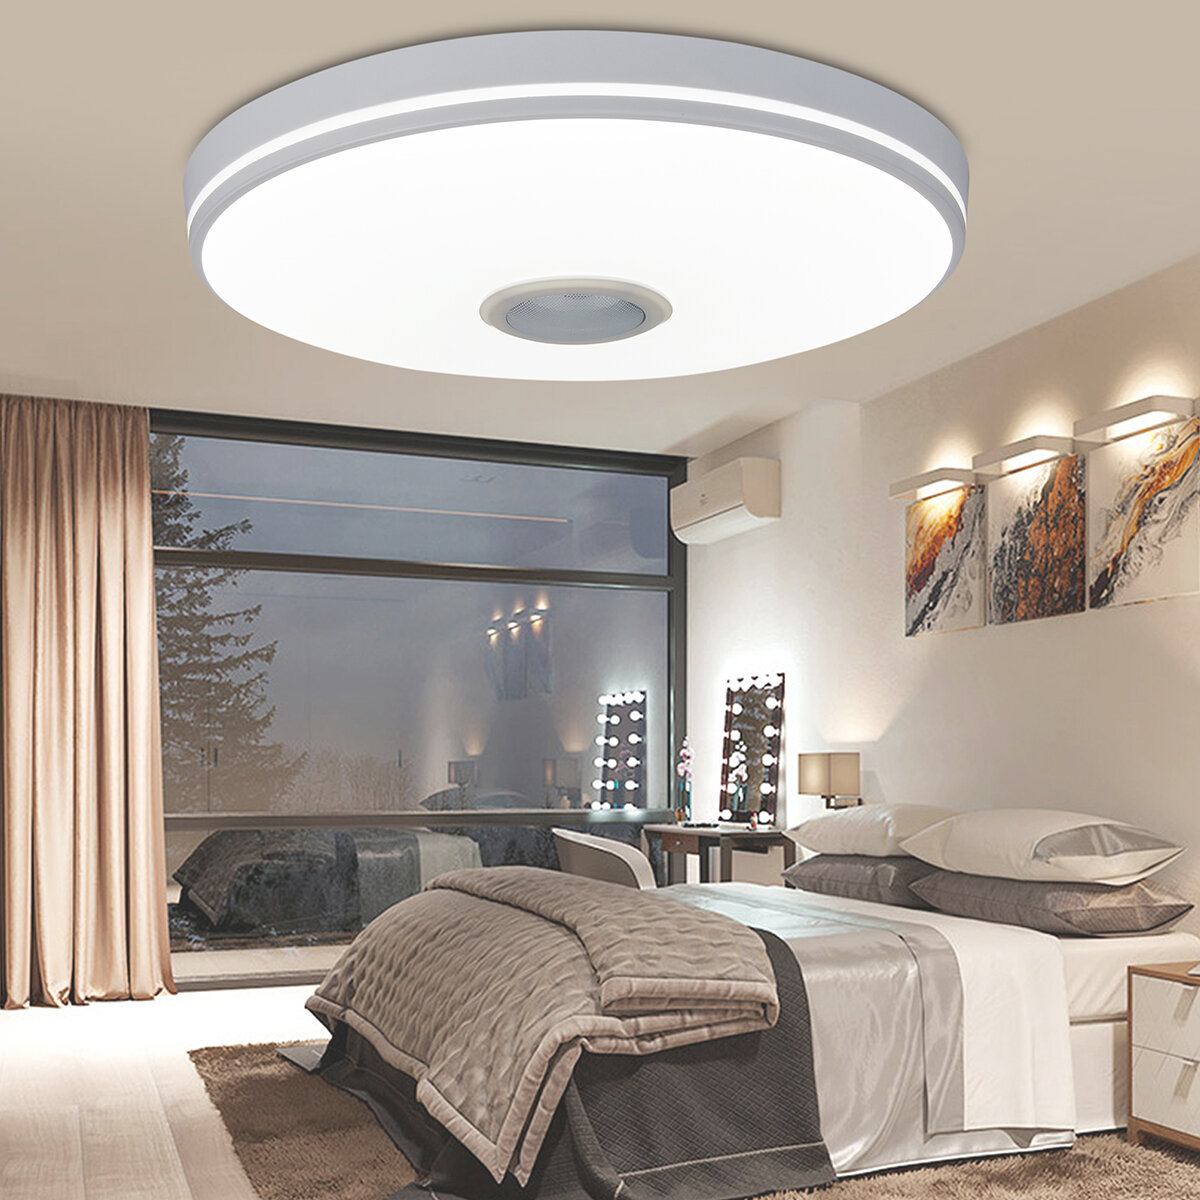 Image of 36/60W 85V-265V 28cm LED Ceiling Light Thin Flush Mount Fixture Wall Lamps